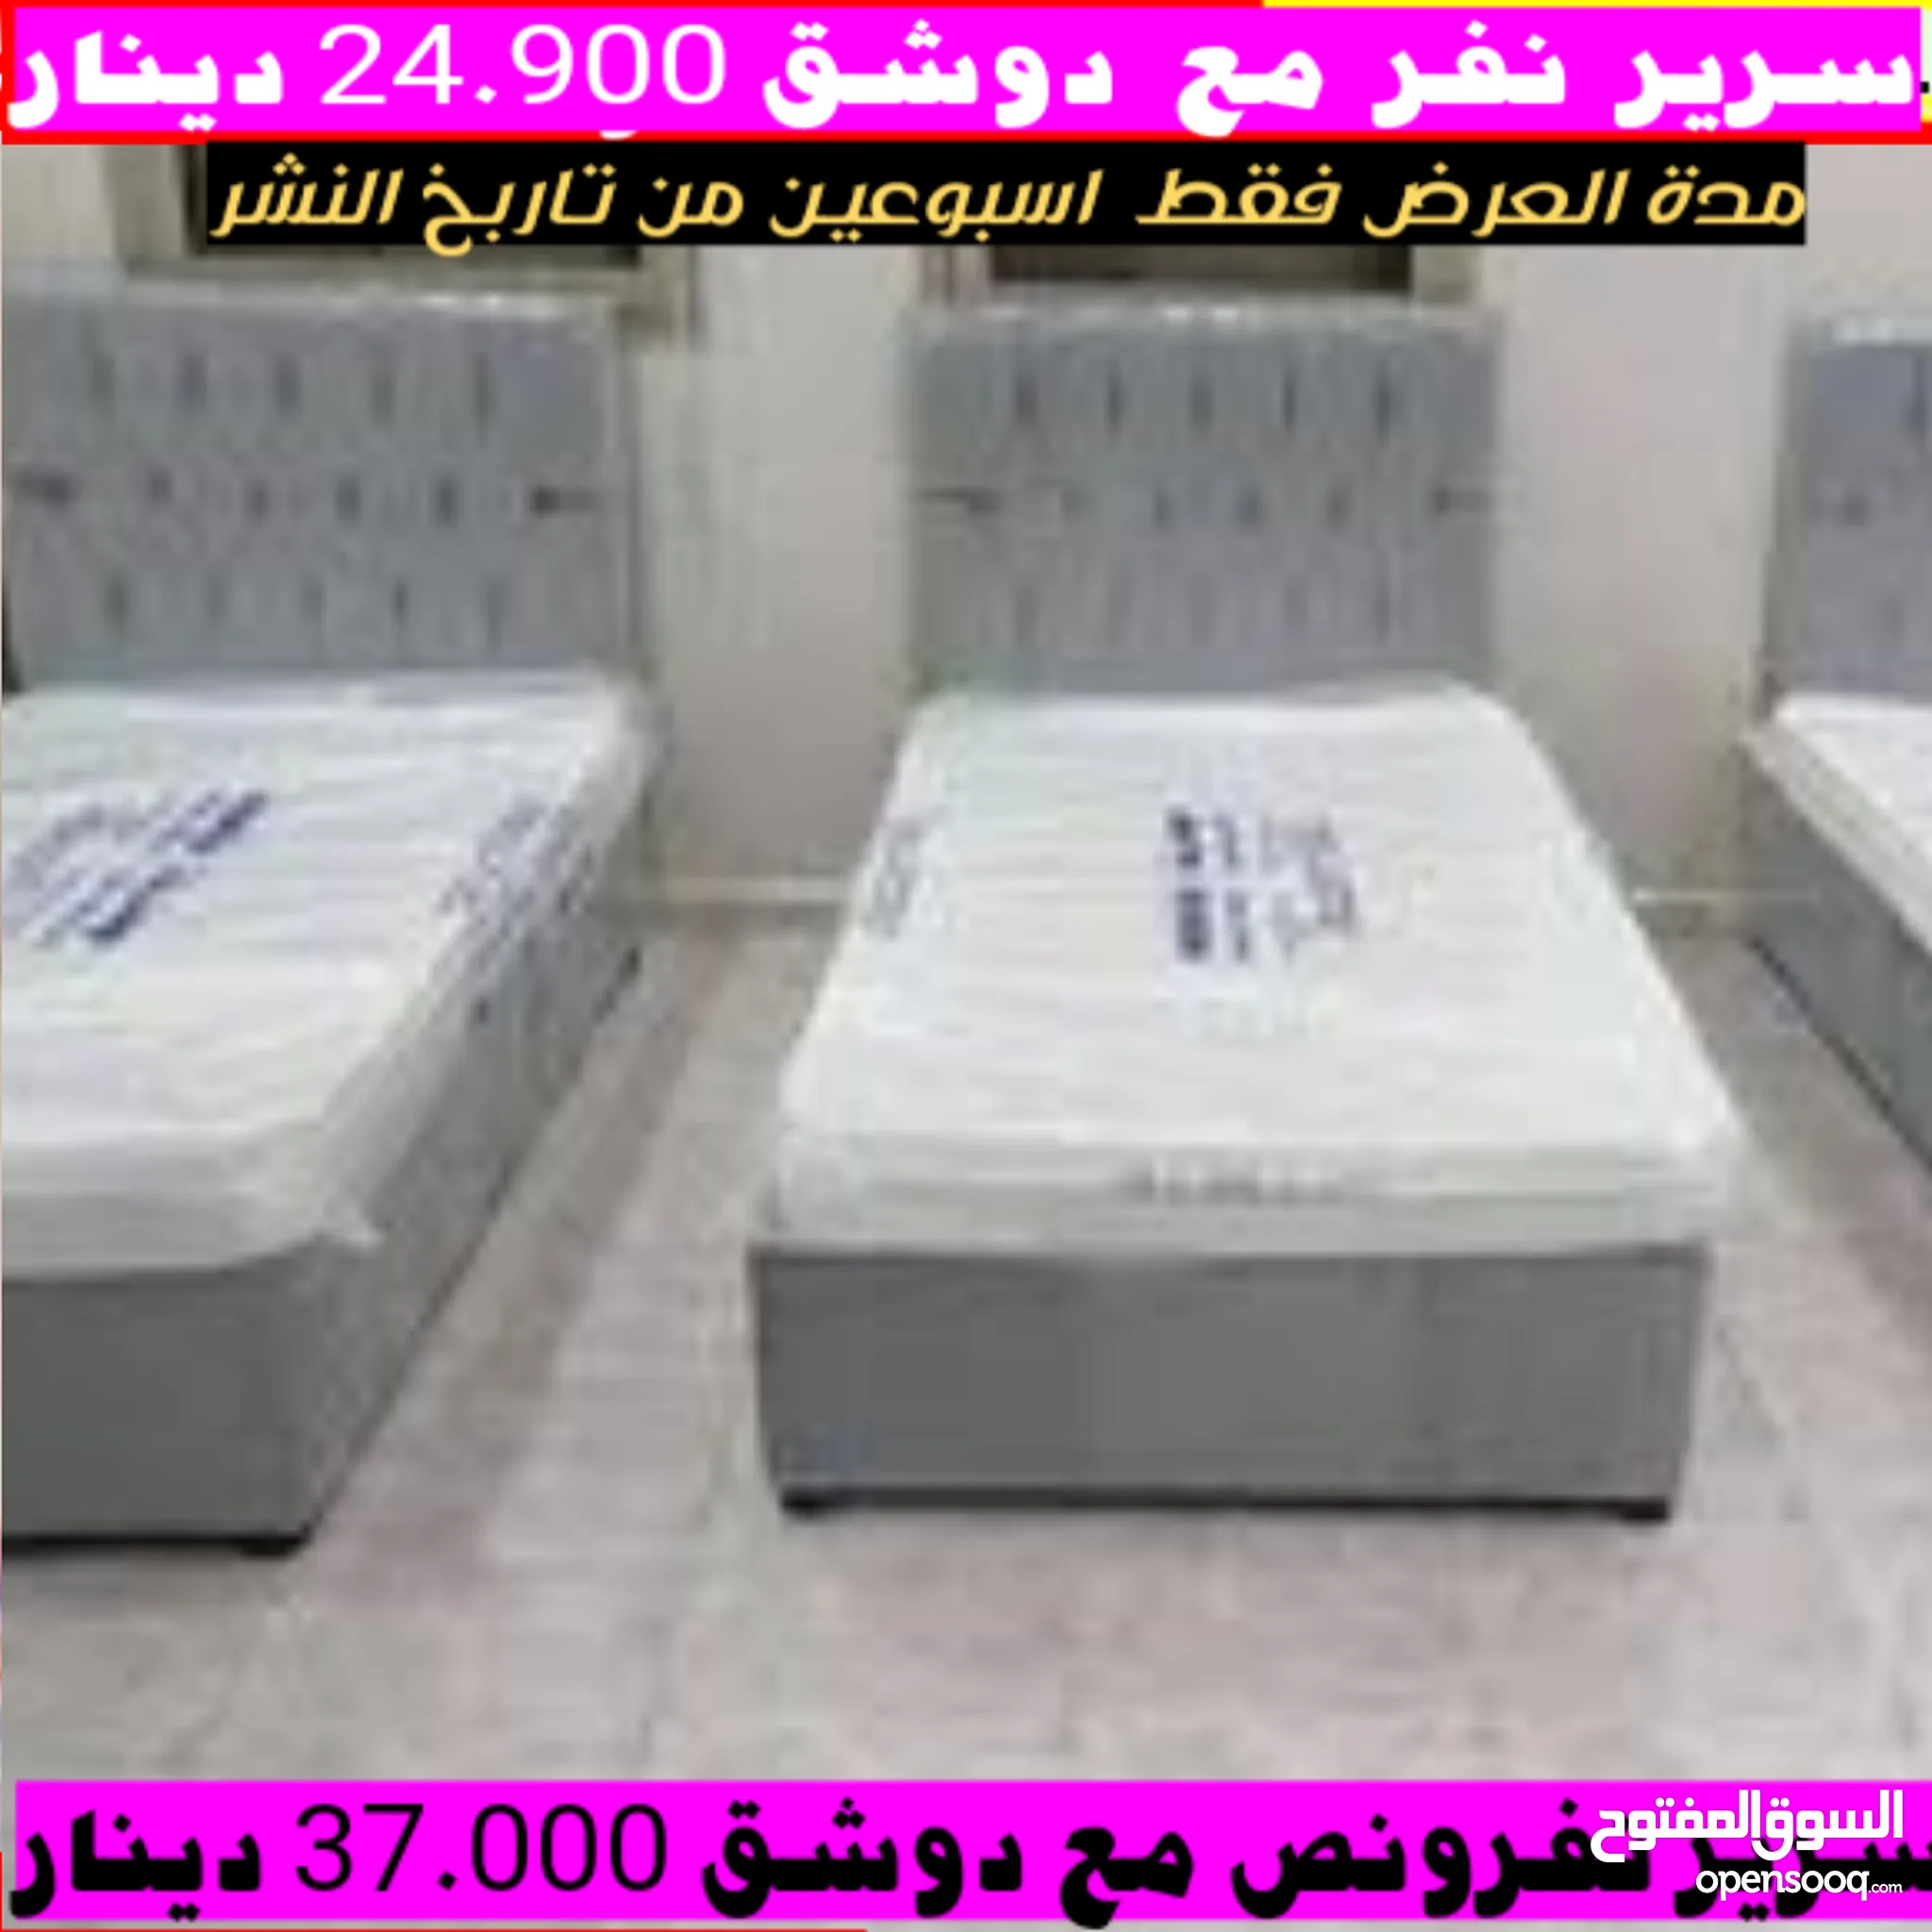 Home & Garden Bedroom Furniture : (Page 2) : Kuwait | OpenSooq